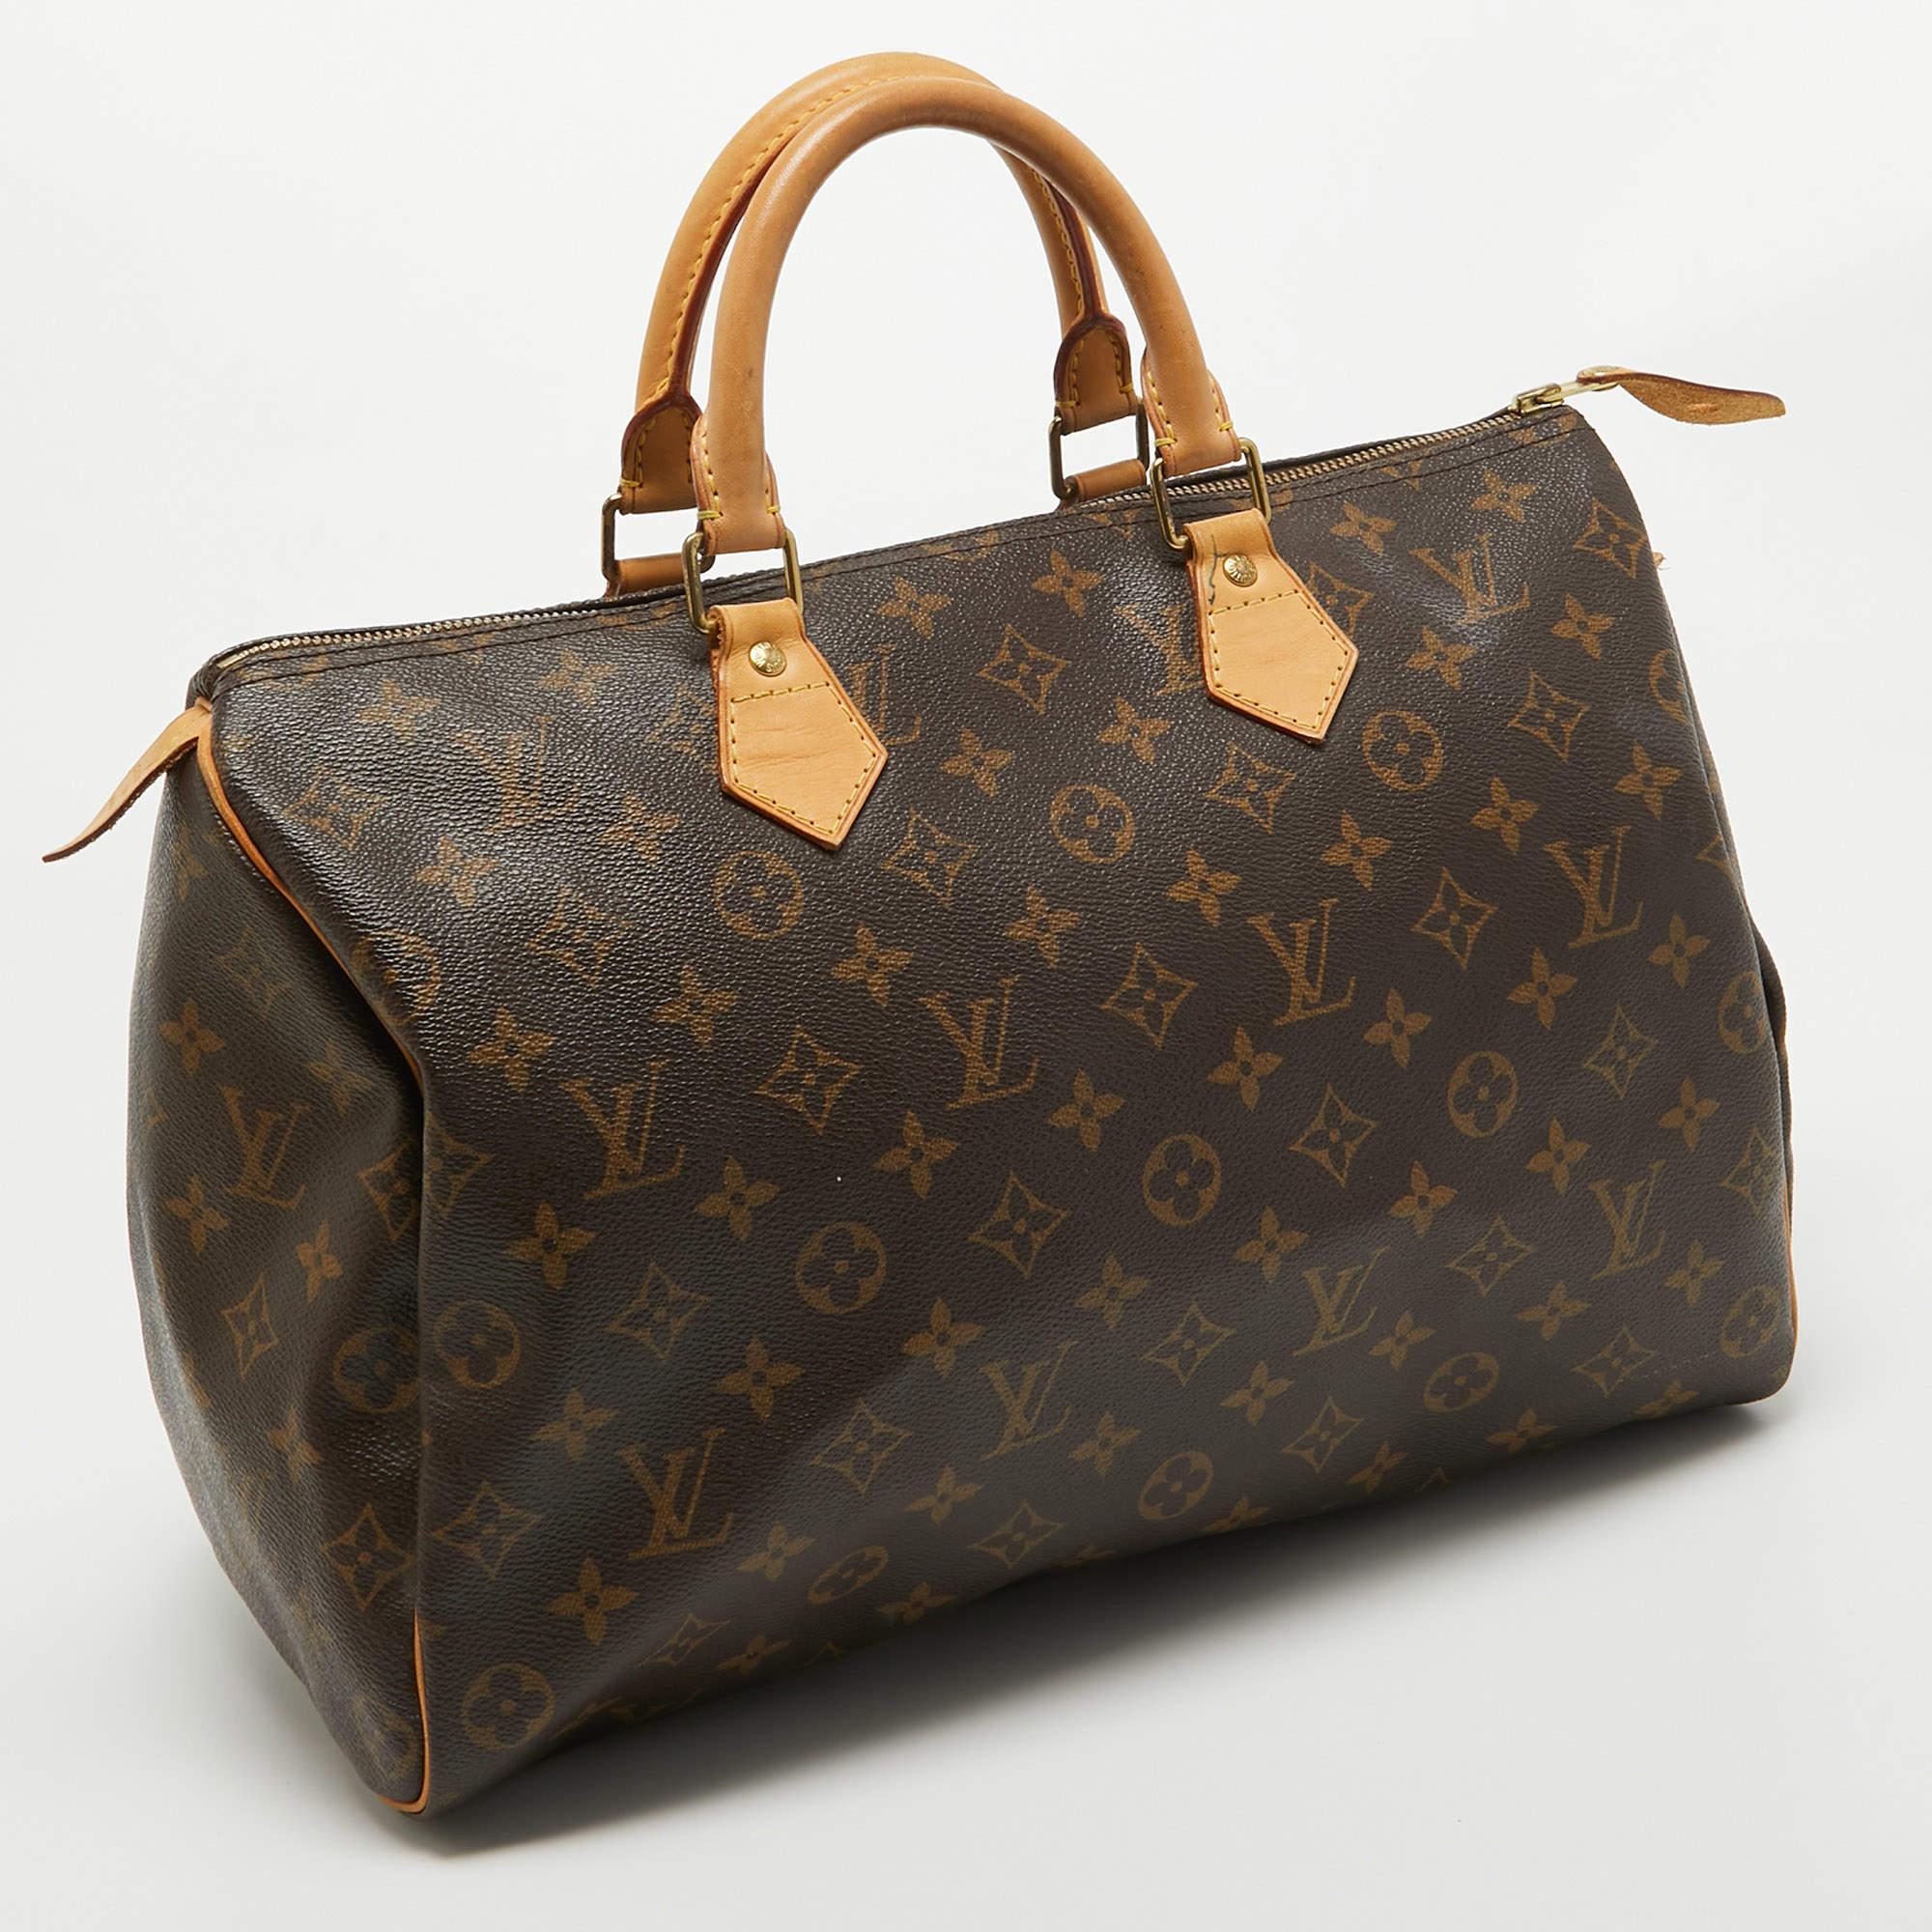 Louis Vuitton Monogram Canvas Speedy 35 Bag For Sale 1